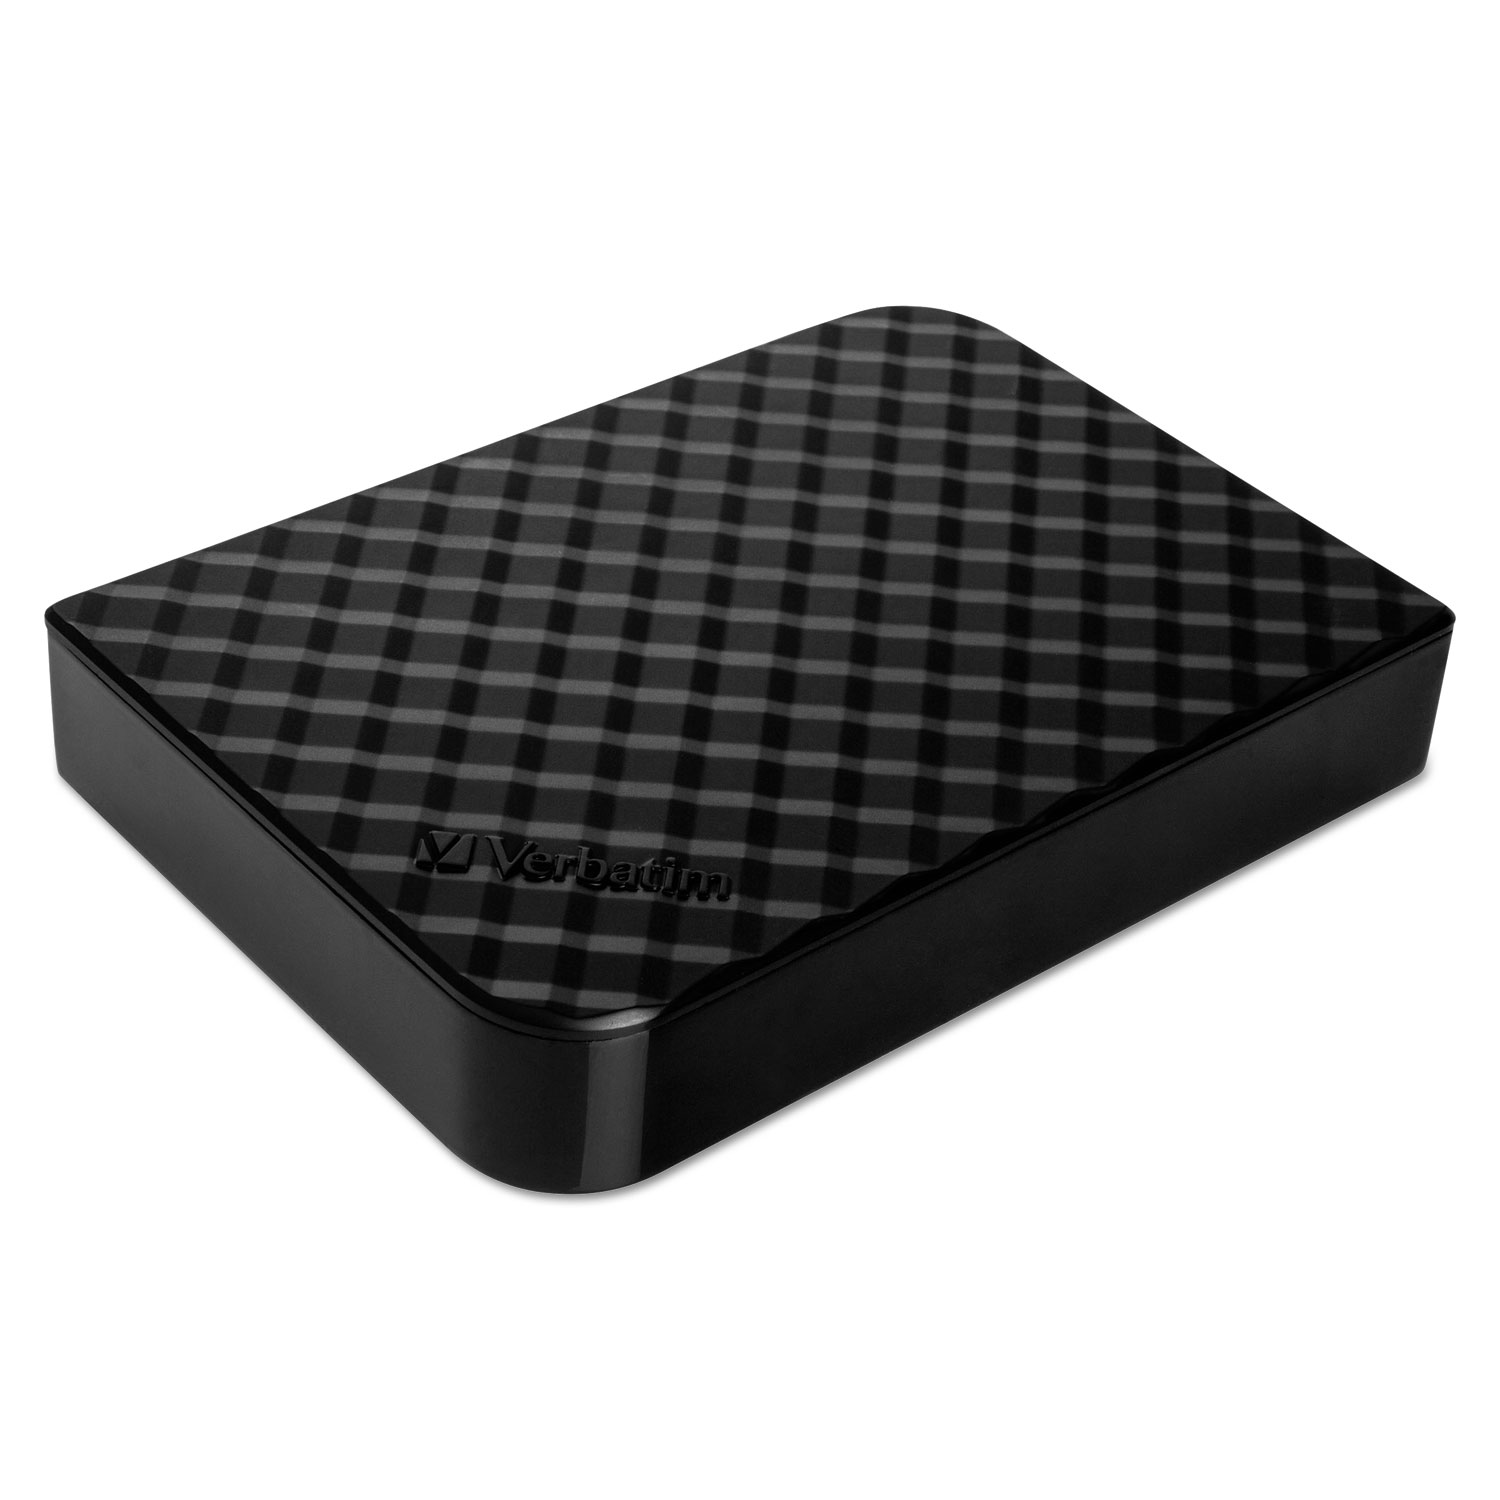 Store 'n’ Save Desktop Hard Drive, USB 3.0, 2 TB, Diamond Black